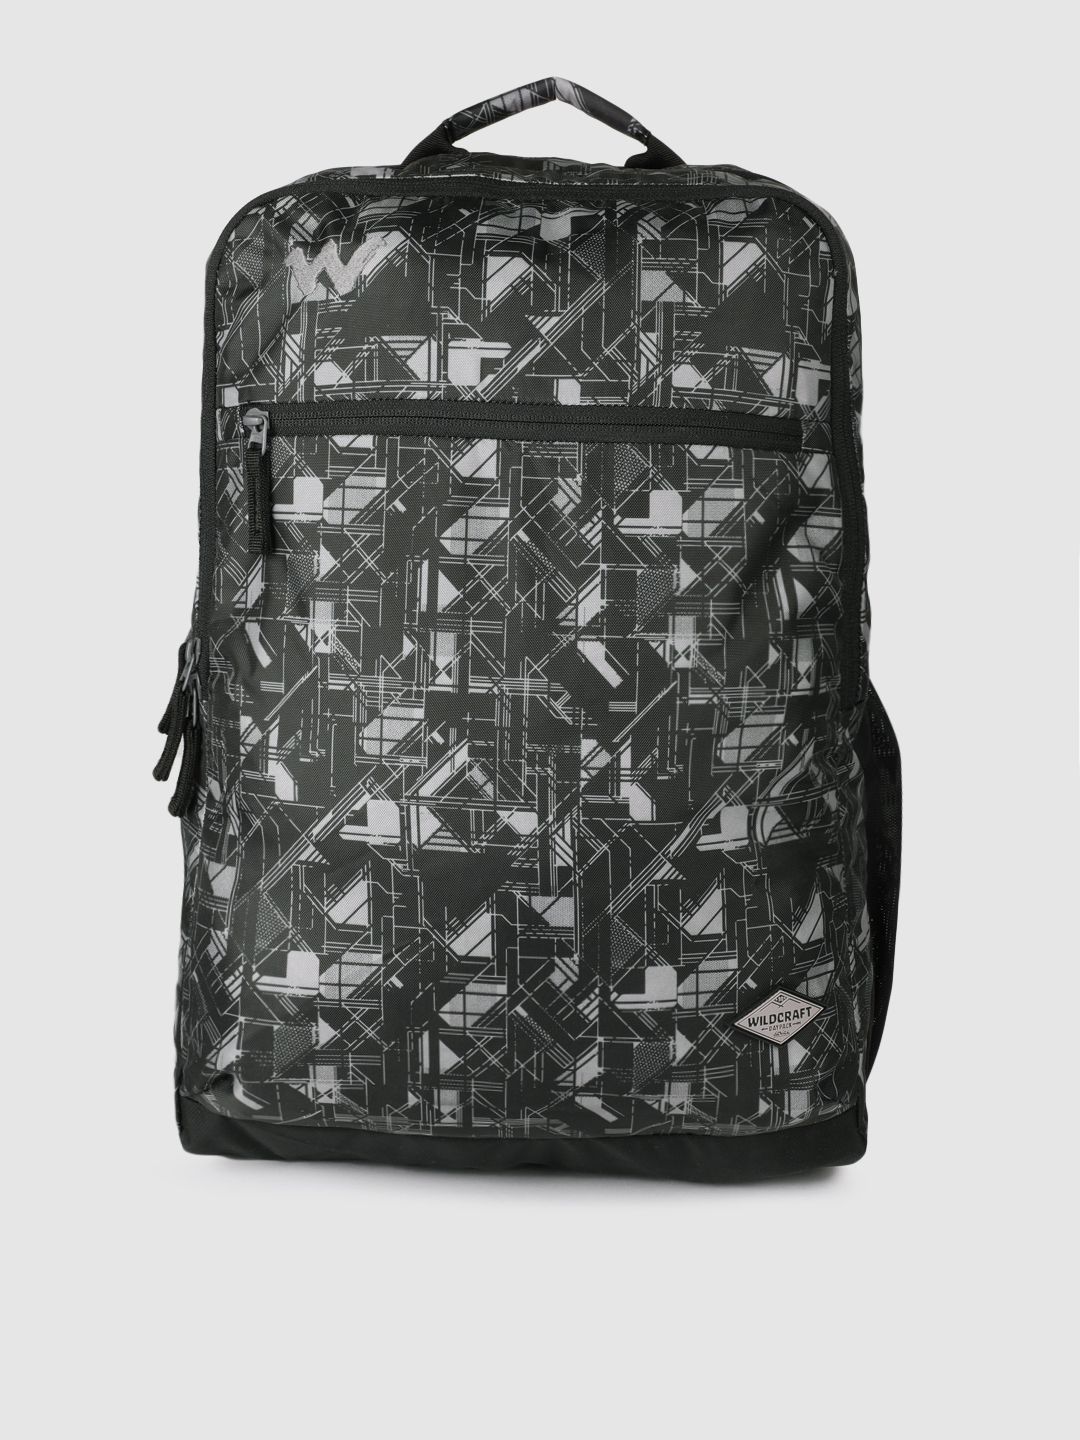 Wildcraft Unisex Black Printed Backpack Price in India